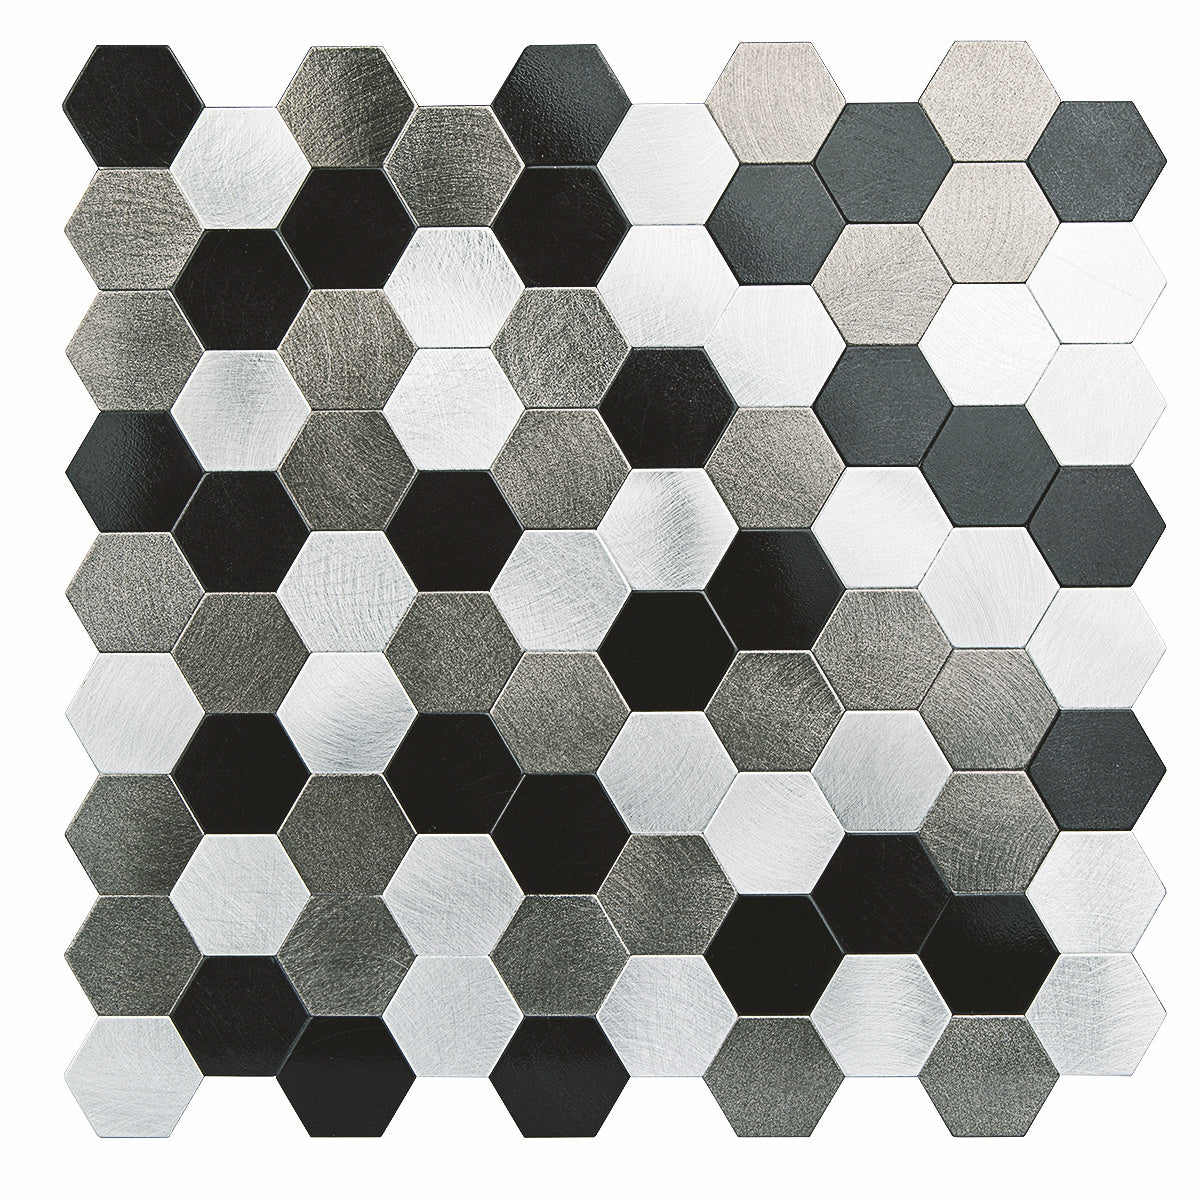 Decopus Metal Tile Backsplash Peel and Stick (Hexagon Black Silver Grey Matte 12 x12'', 1.6'')